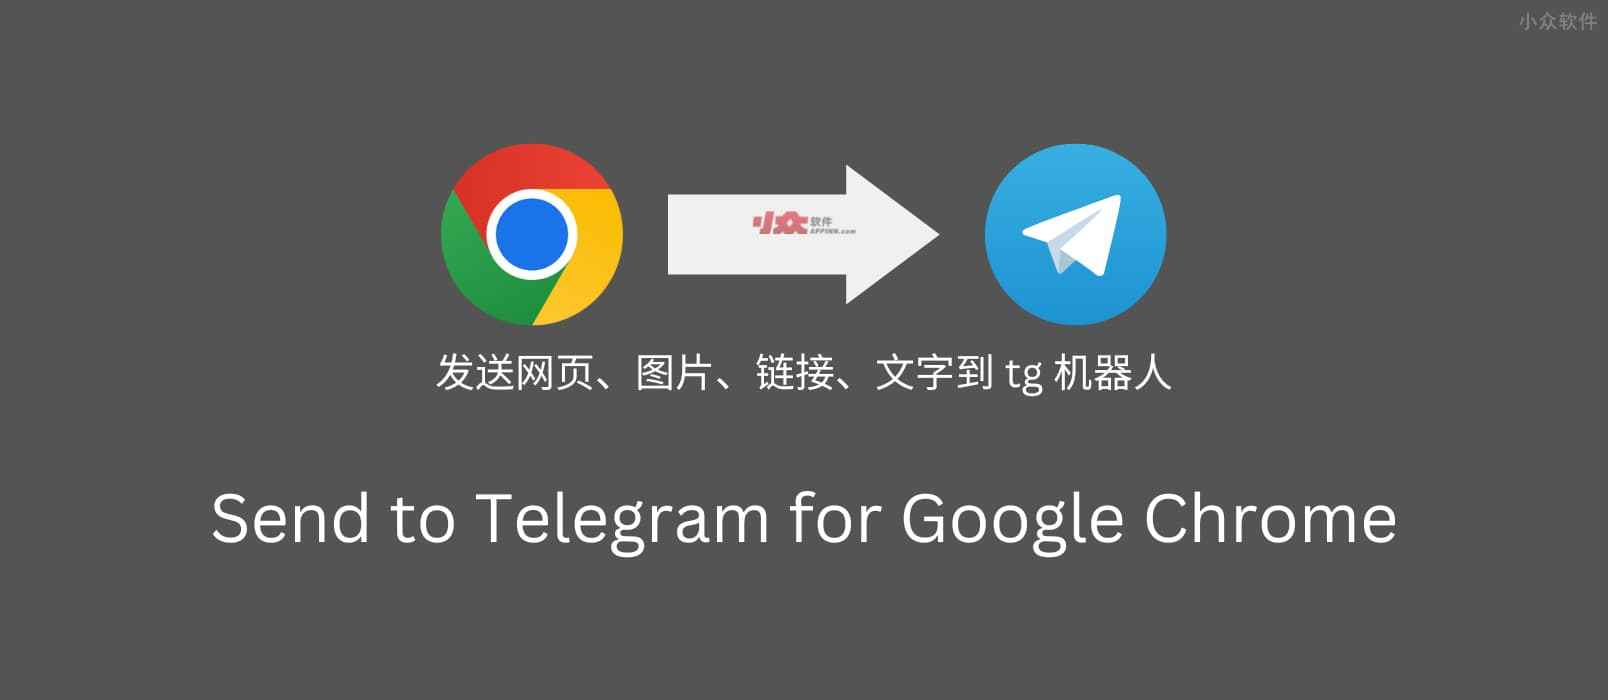 Send to Telegram for Google Chrome – 发送网页、图片、链接、文字到 tg 机器人